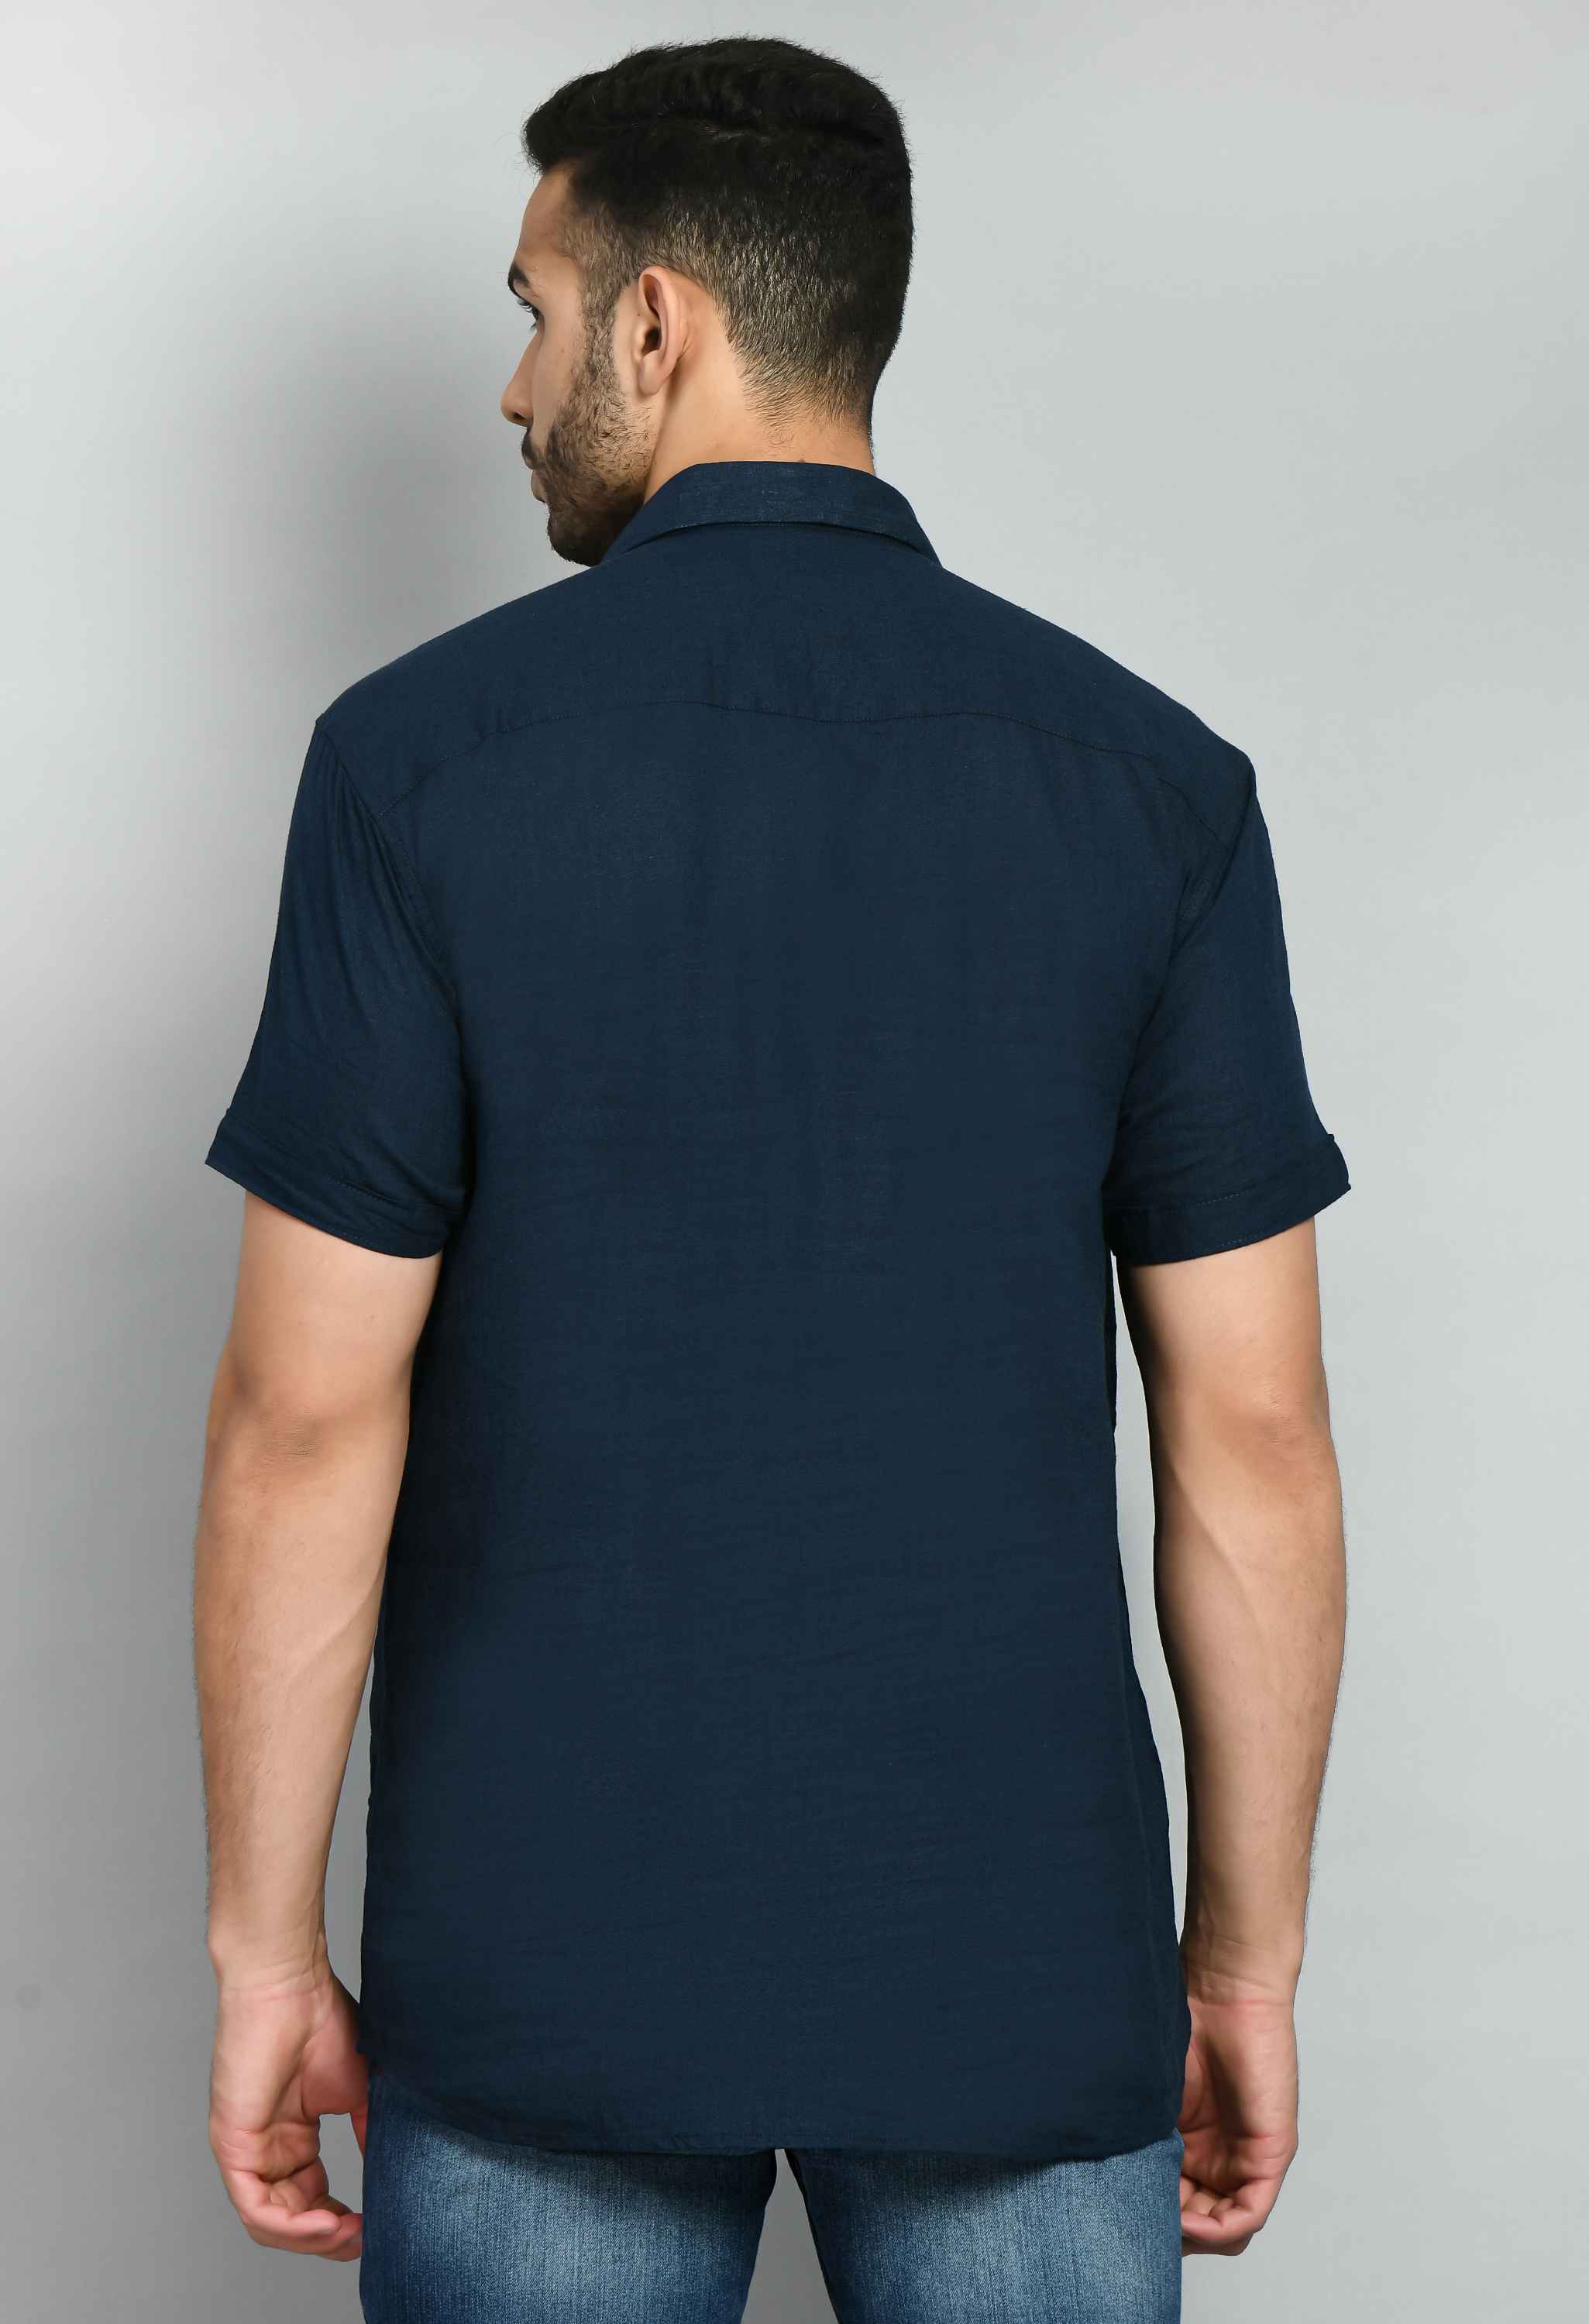 Solid Navy Linen Shirt - SQUIREHOOD